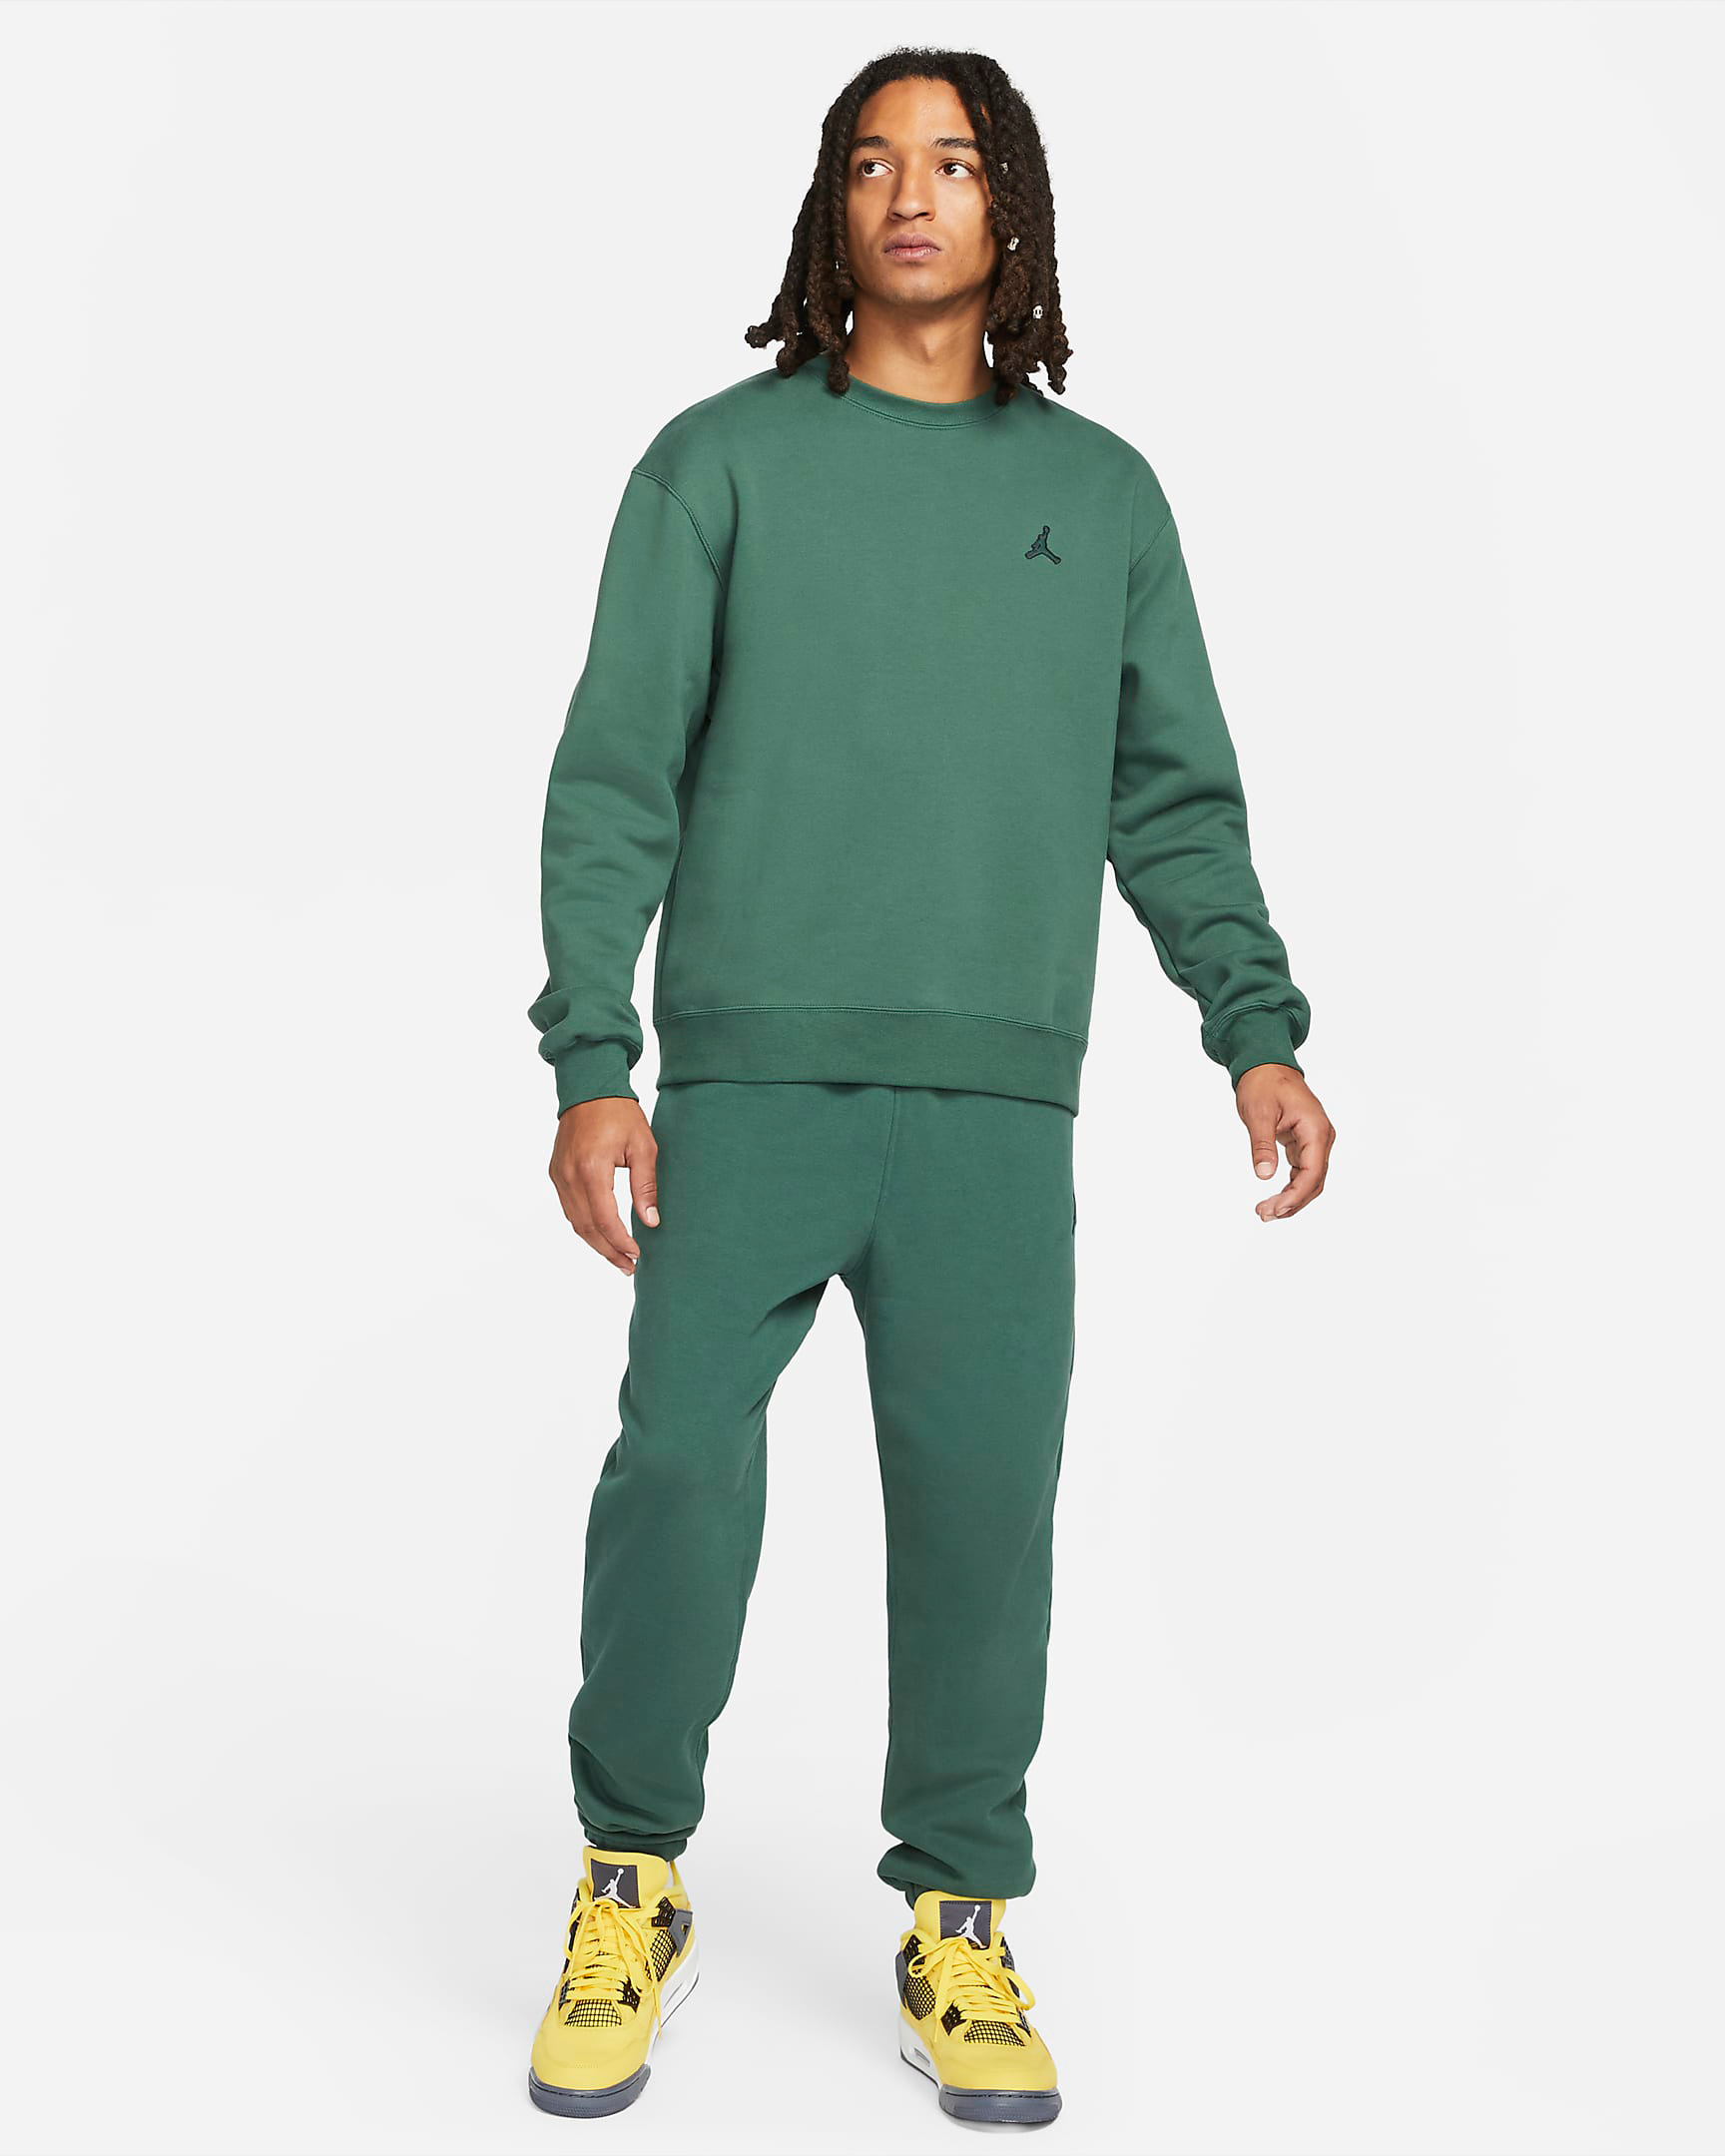 jordan-noble-green-statement-crew-sweatshirt-pants-outfit